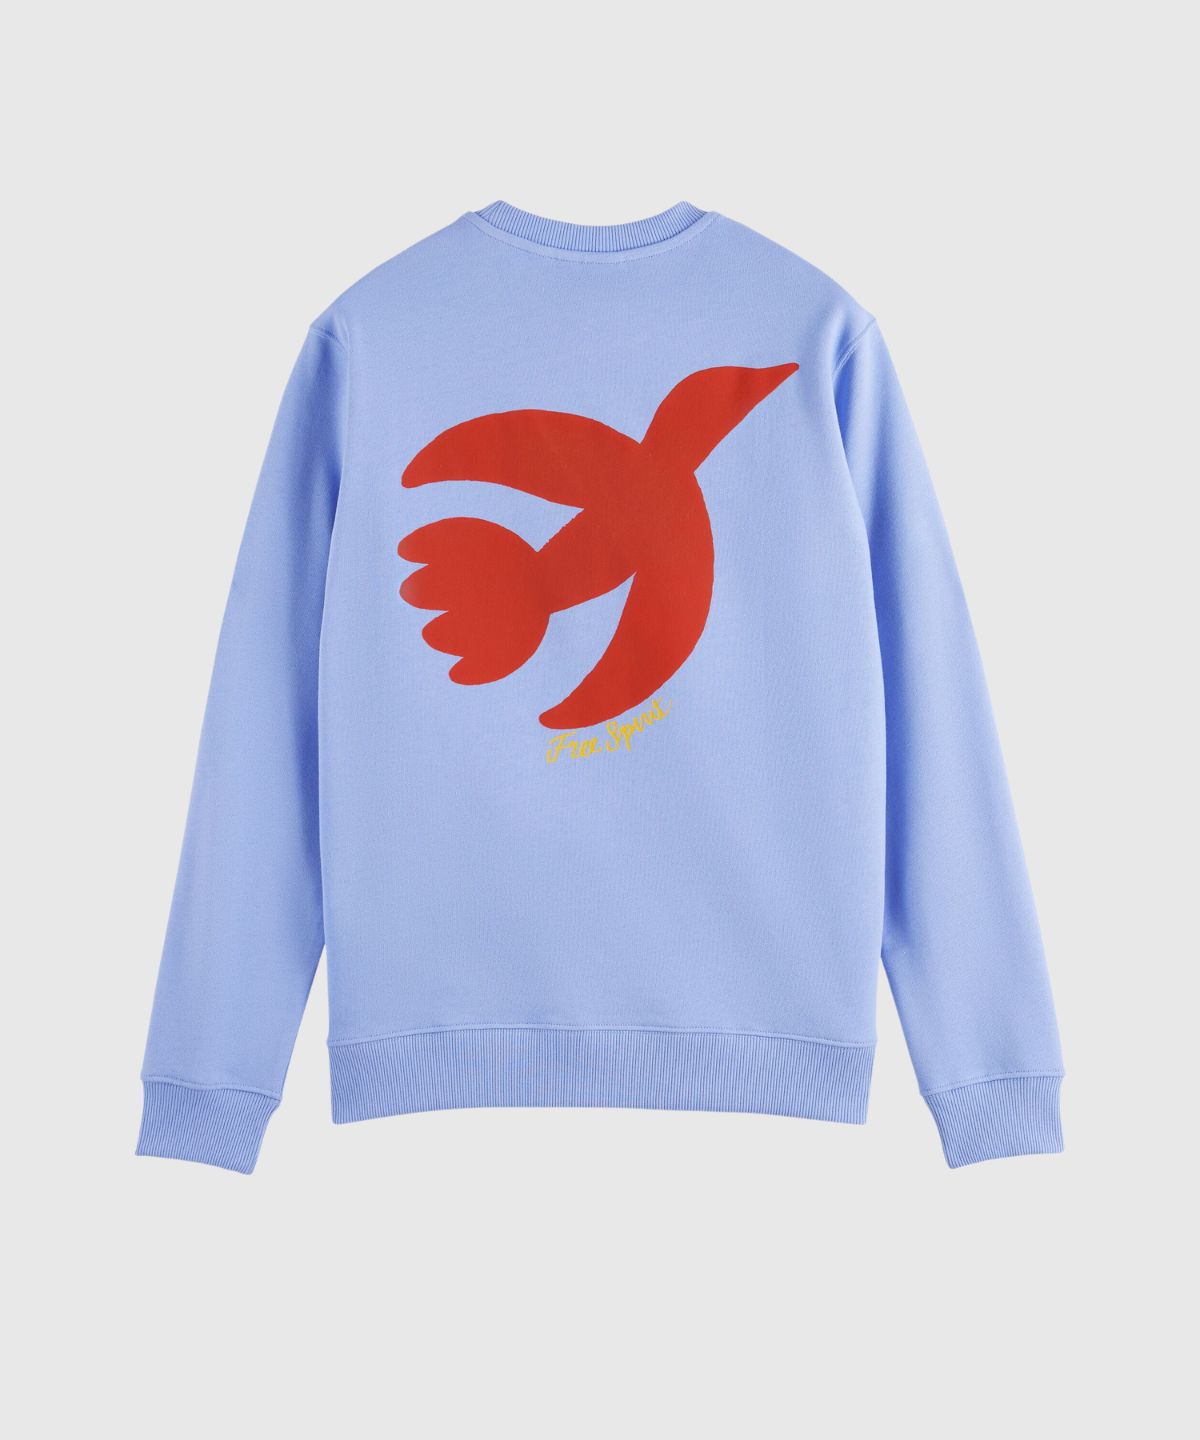 The free spirit peace bird Organic Cotton sweatshirt